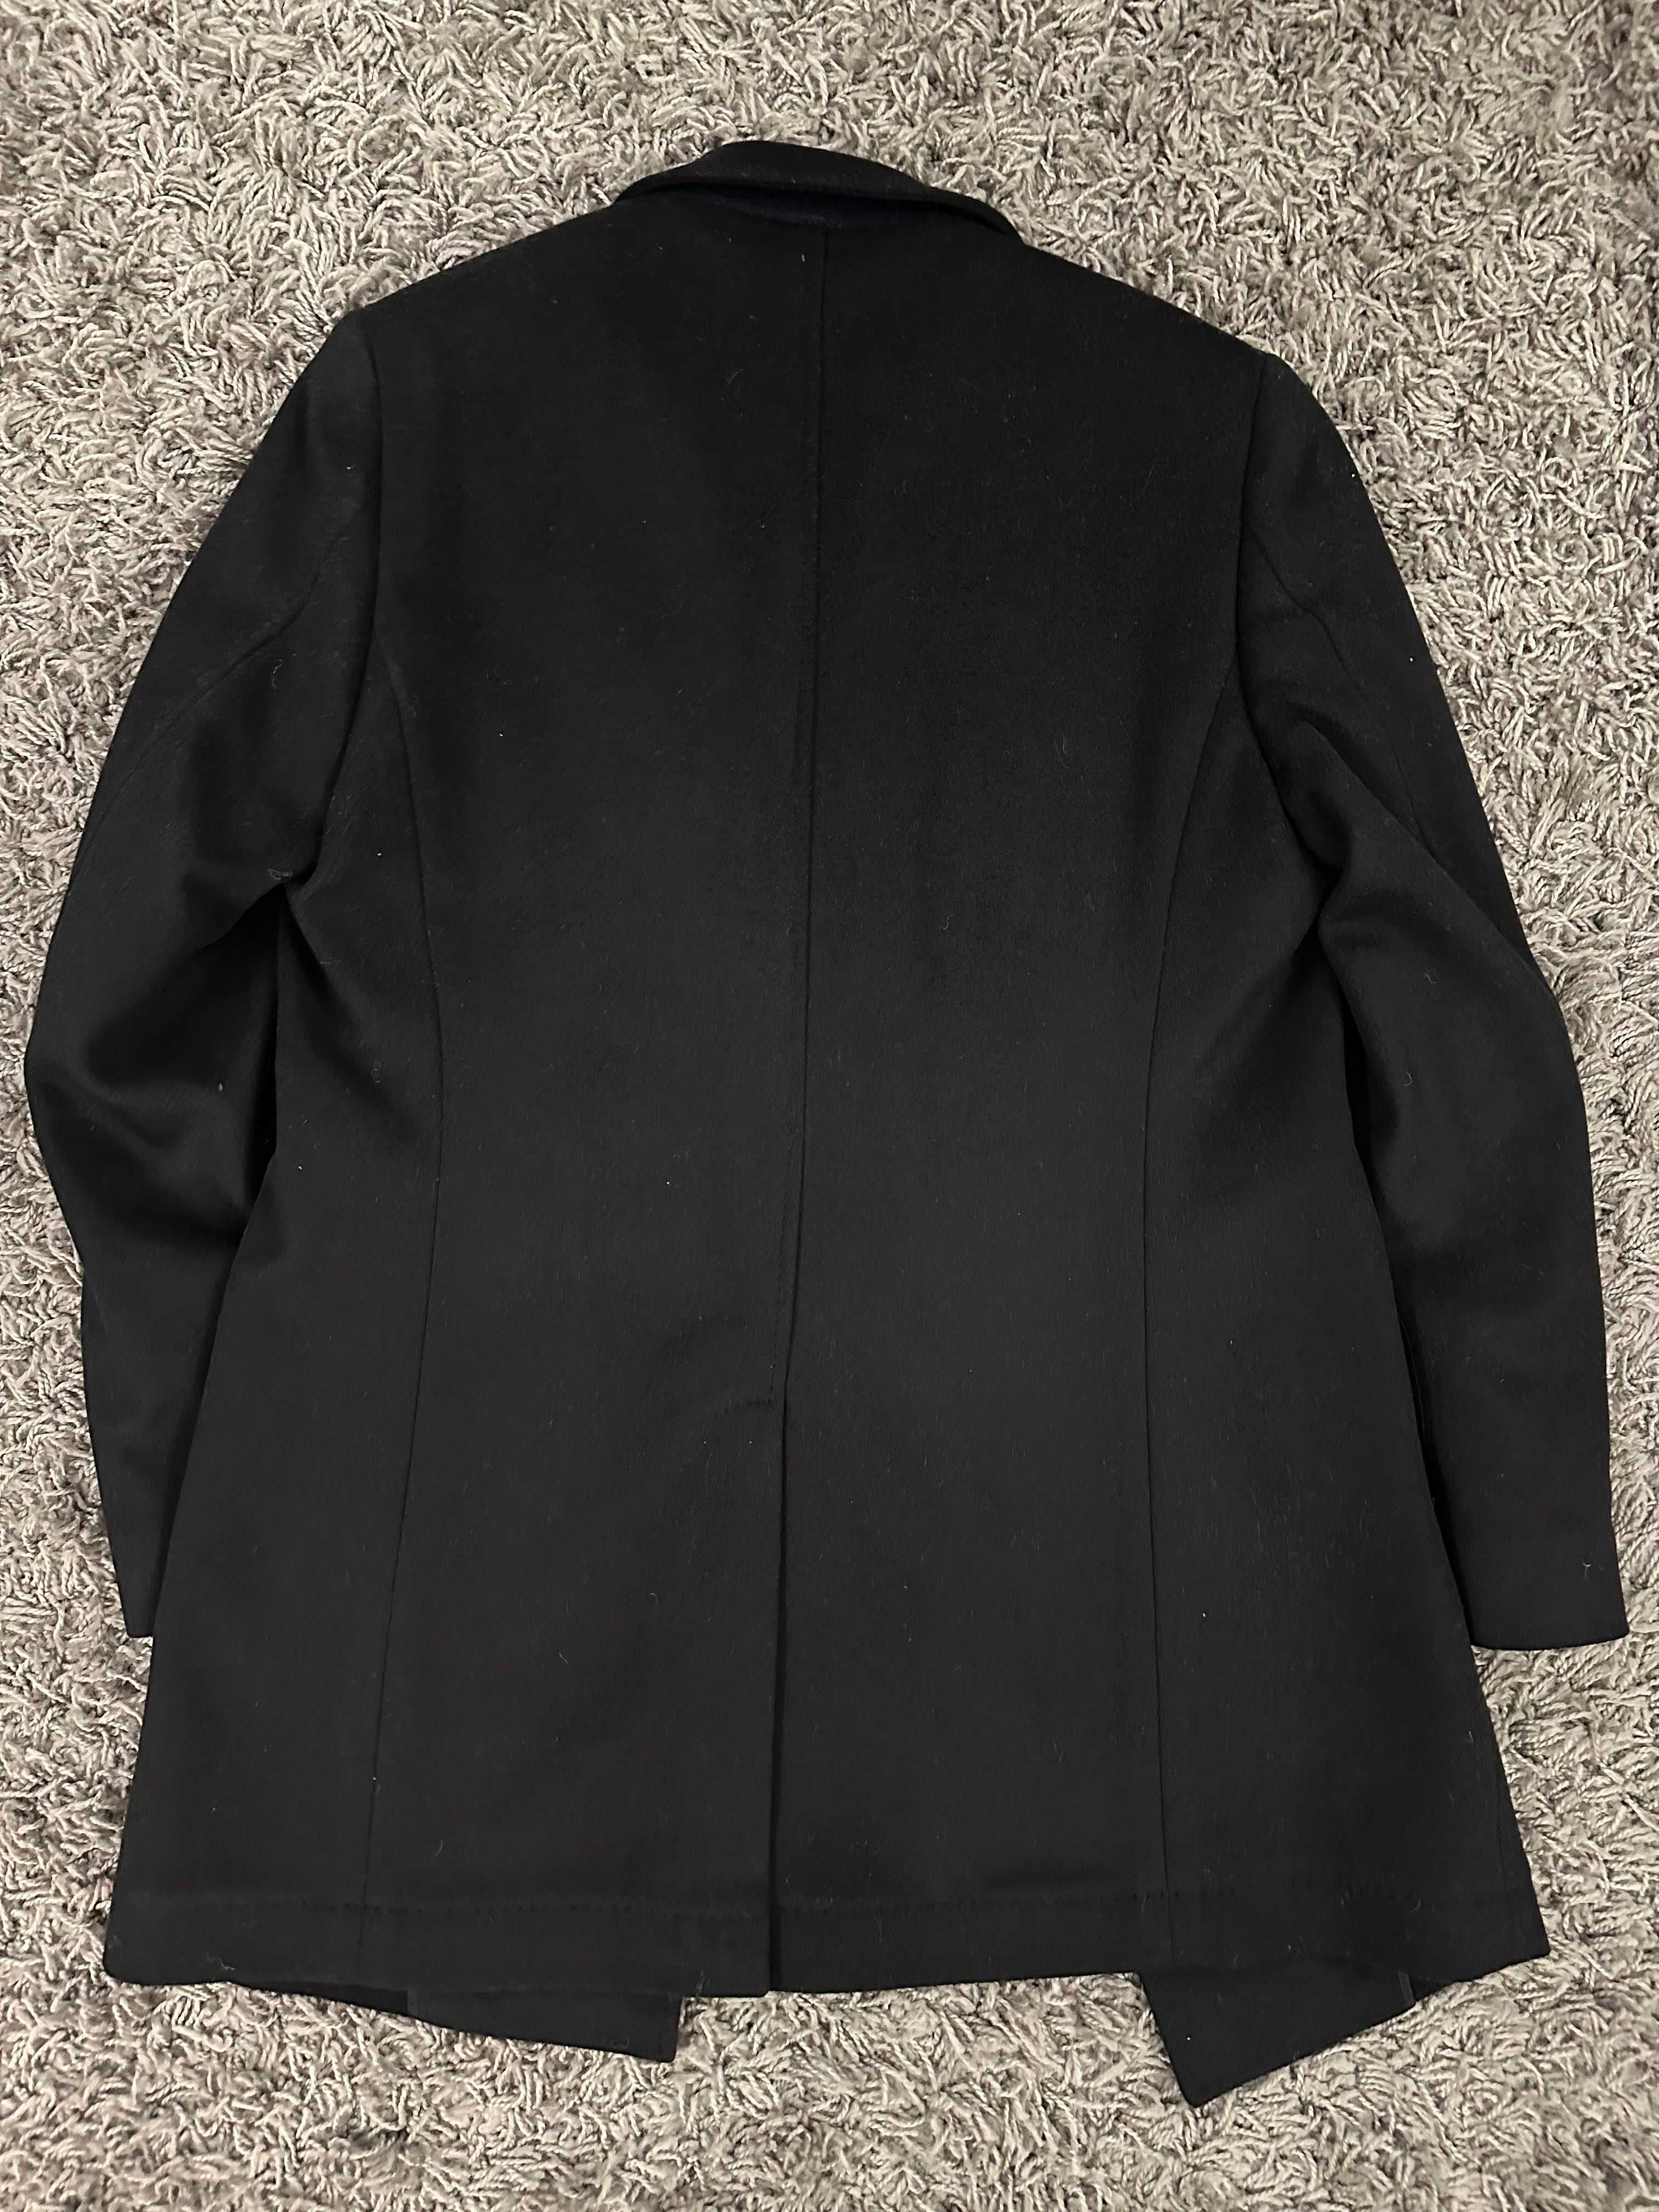 Massimo Dutti пальто чоловіче, розмір M, нове